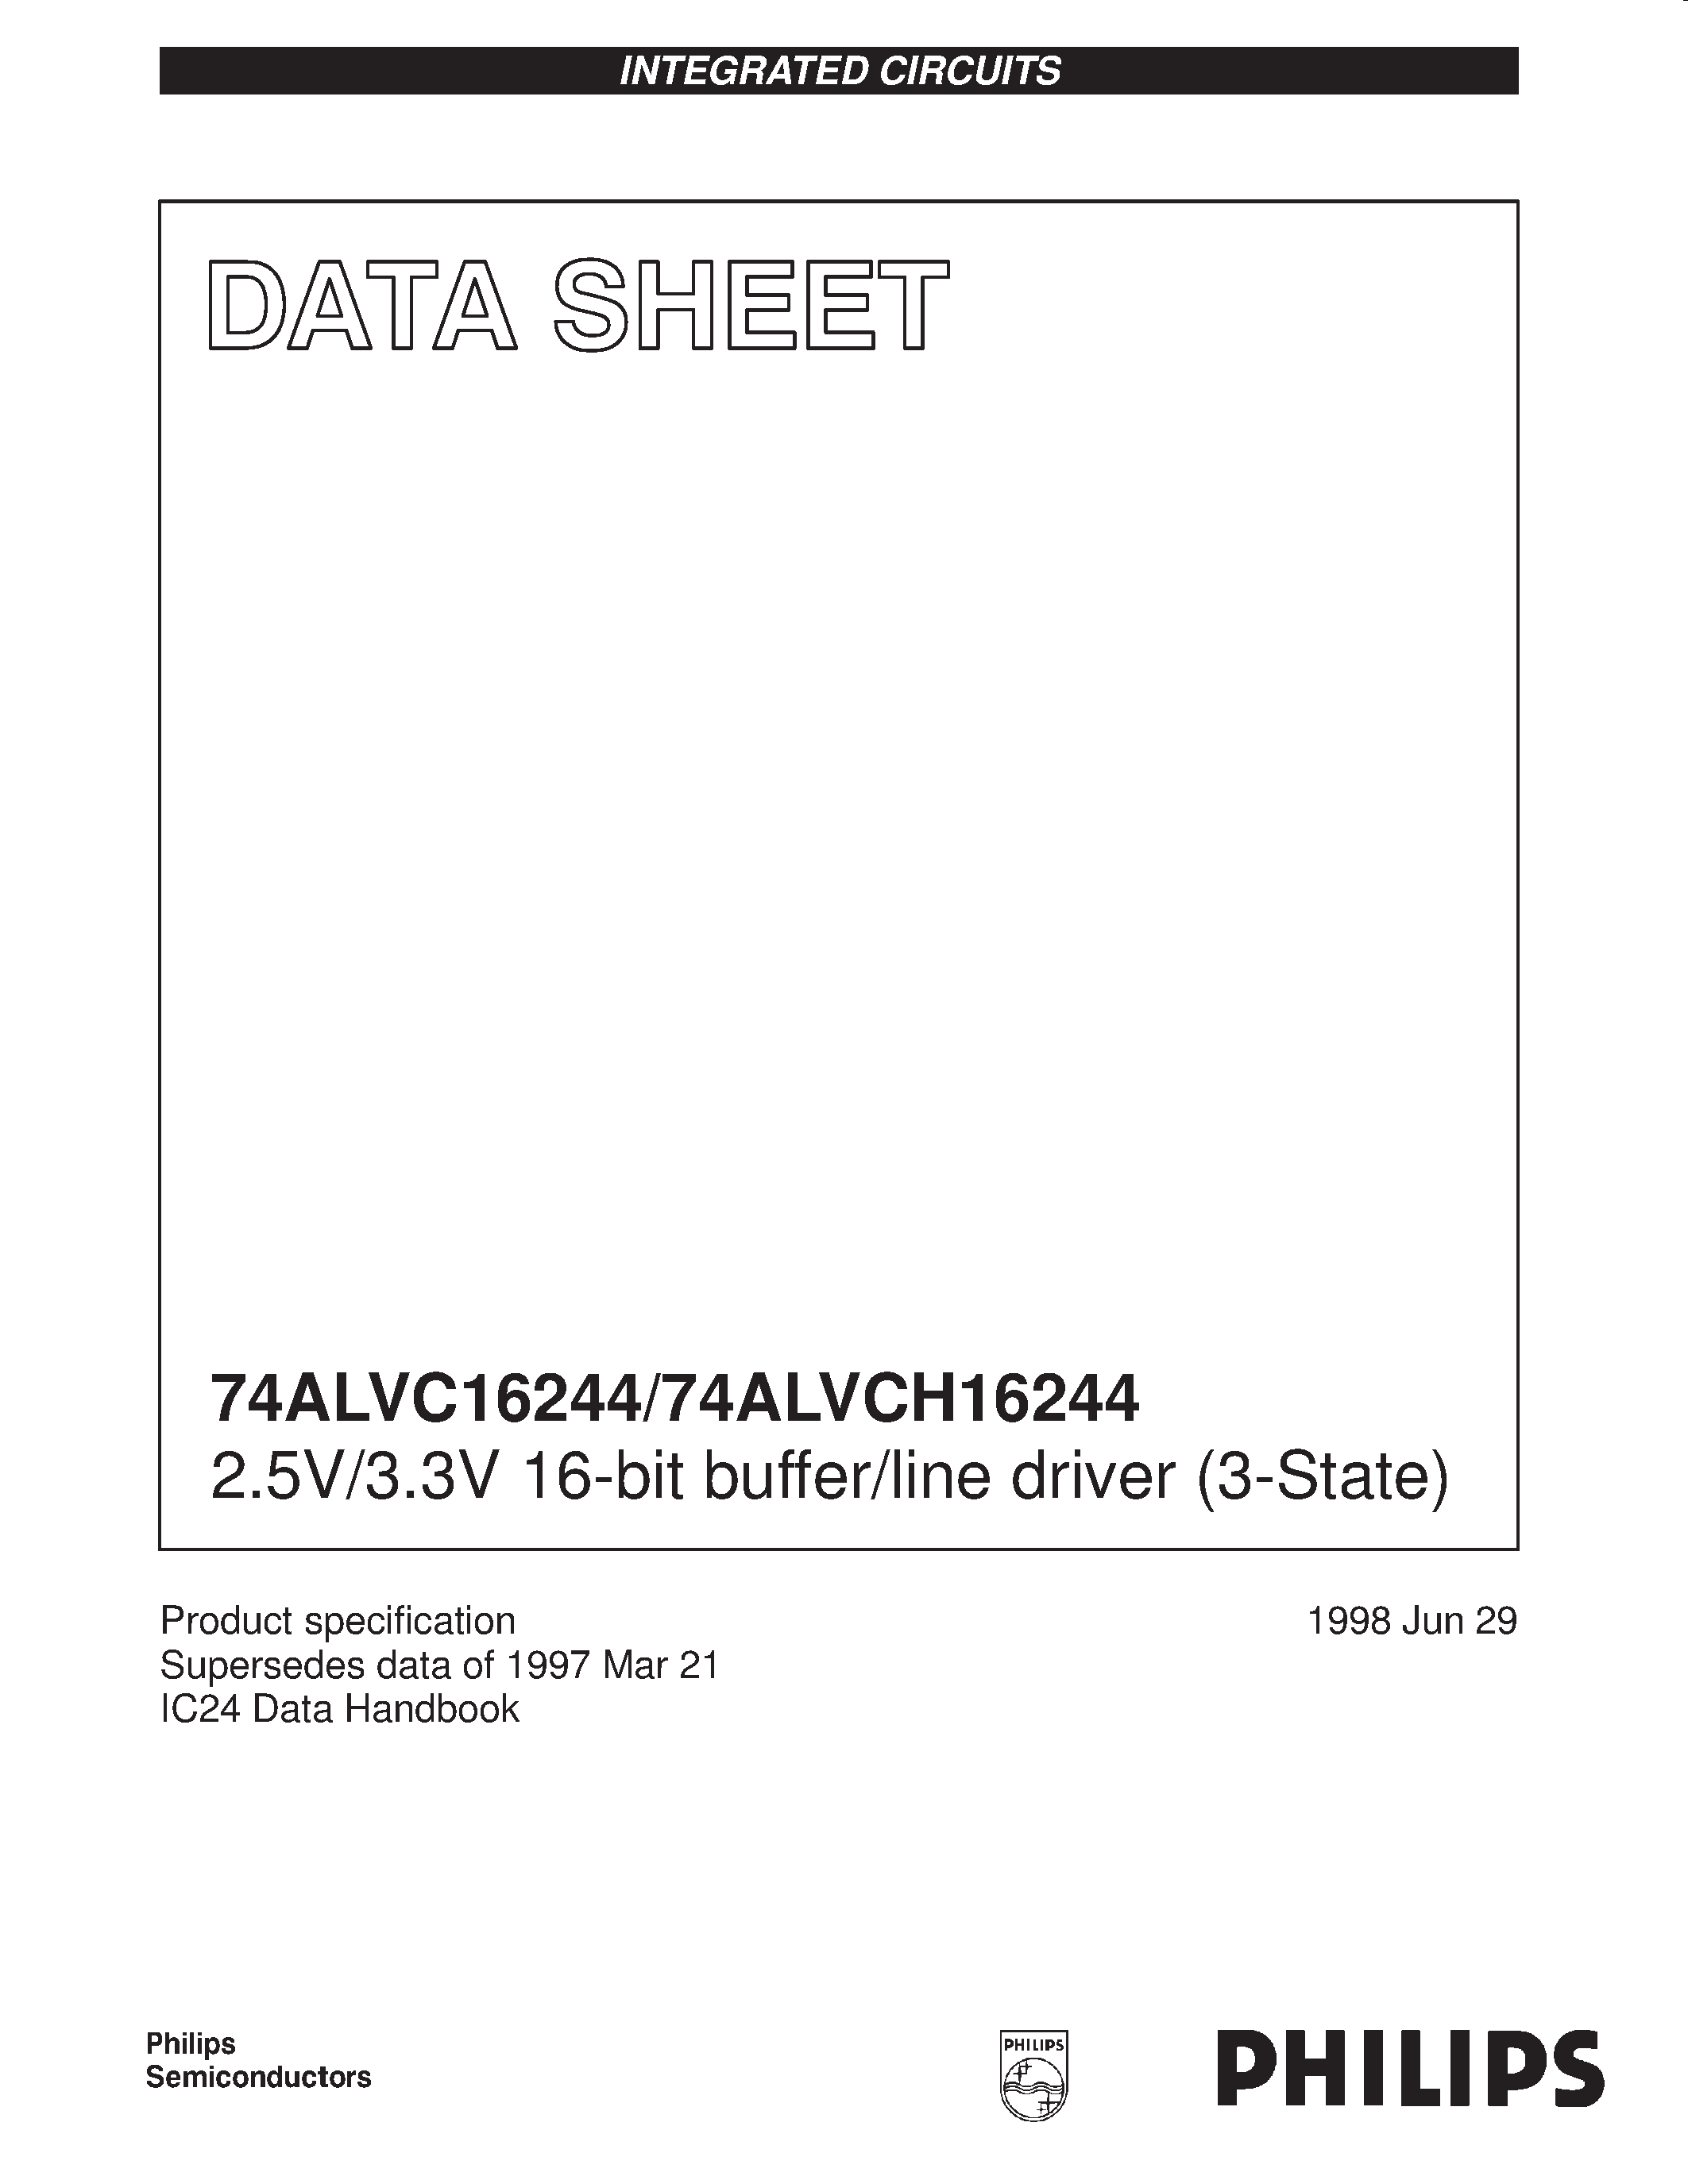 Даташит 74ALVC16244 - 2.5V/3.3V 16-bit buffer/line driver 3-State страница 1